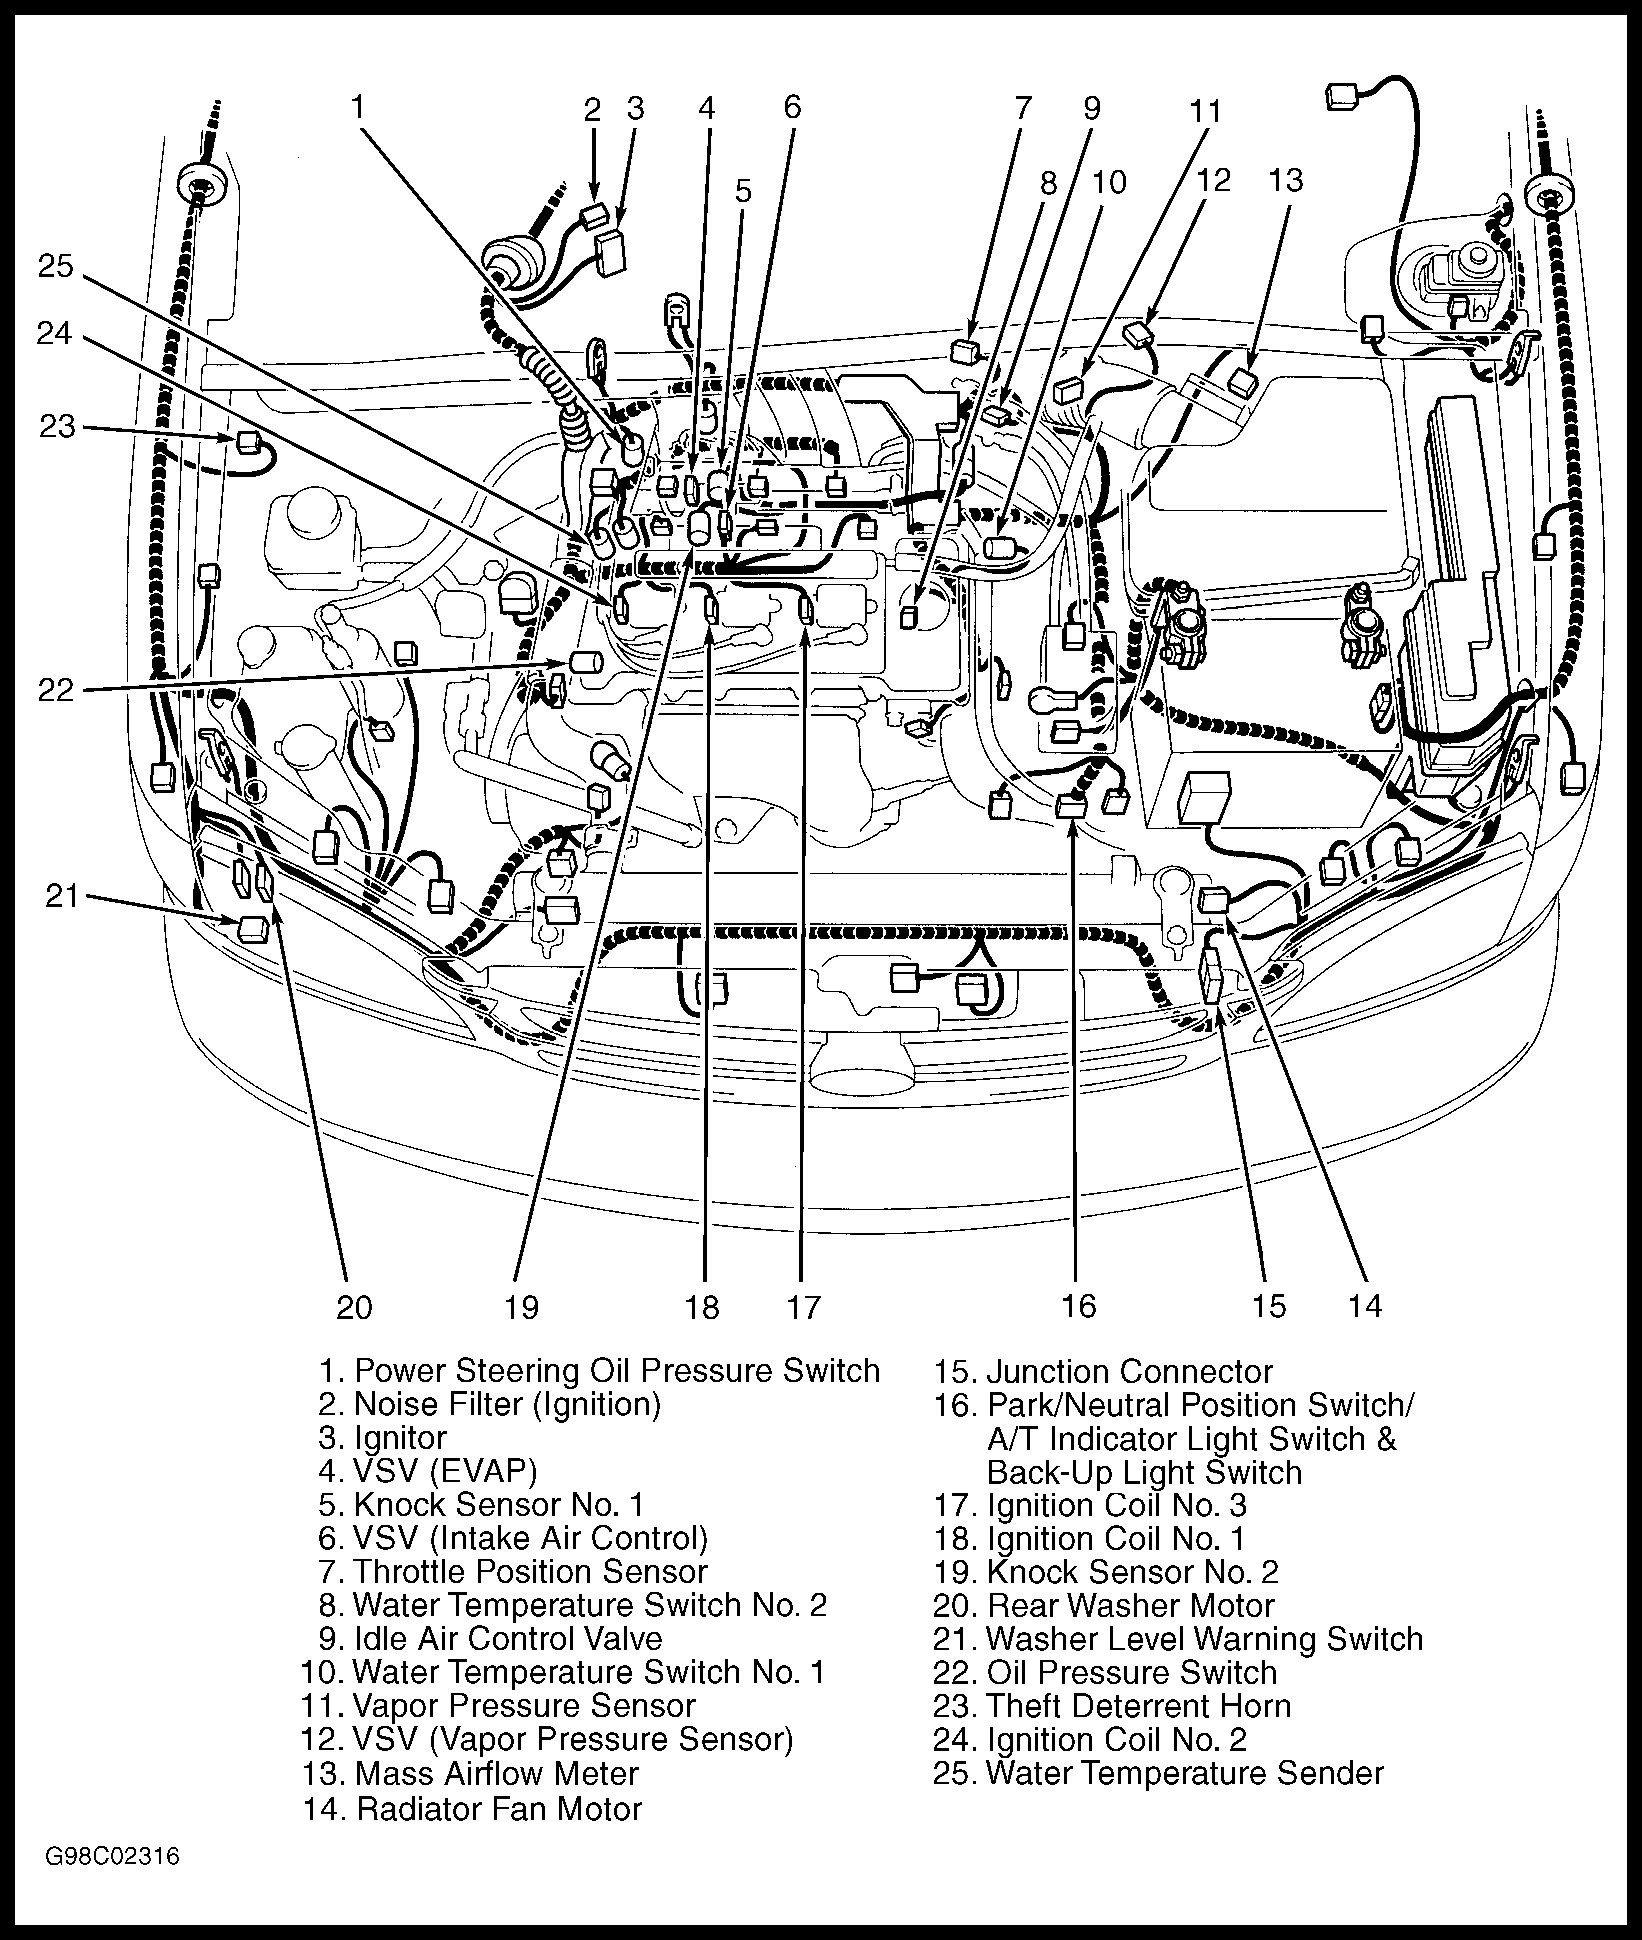 toyota v4 engine diagram smart wiring diagrams u2022 rh krakencraft co 2006 toyota rav4 engine diagram